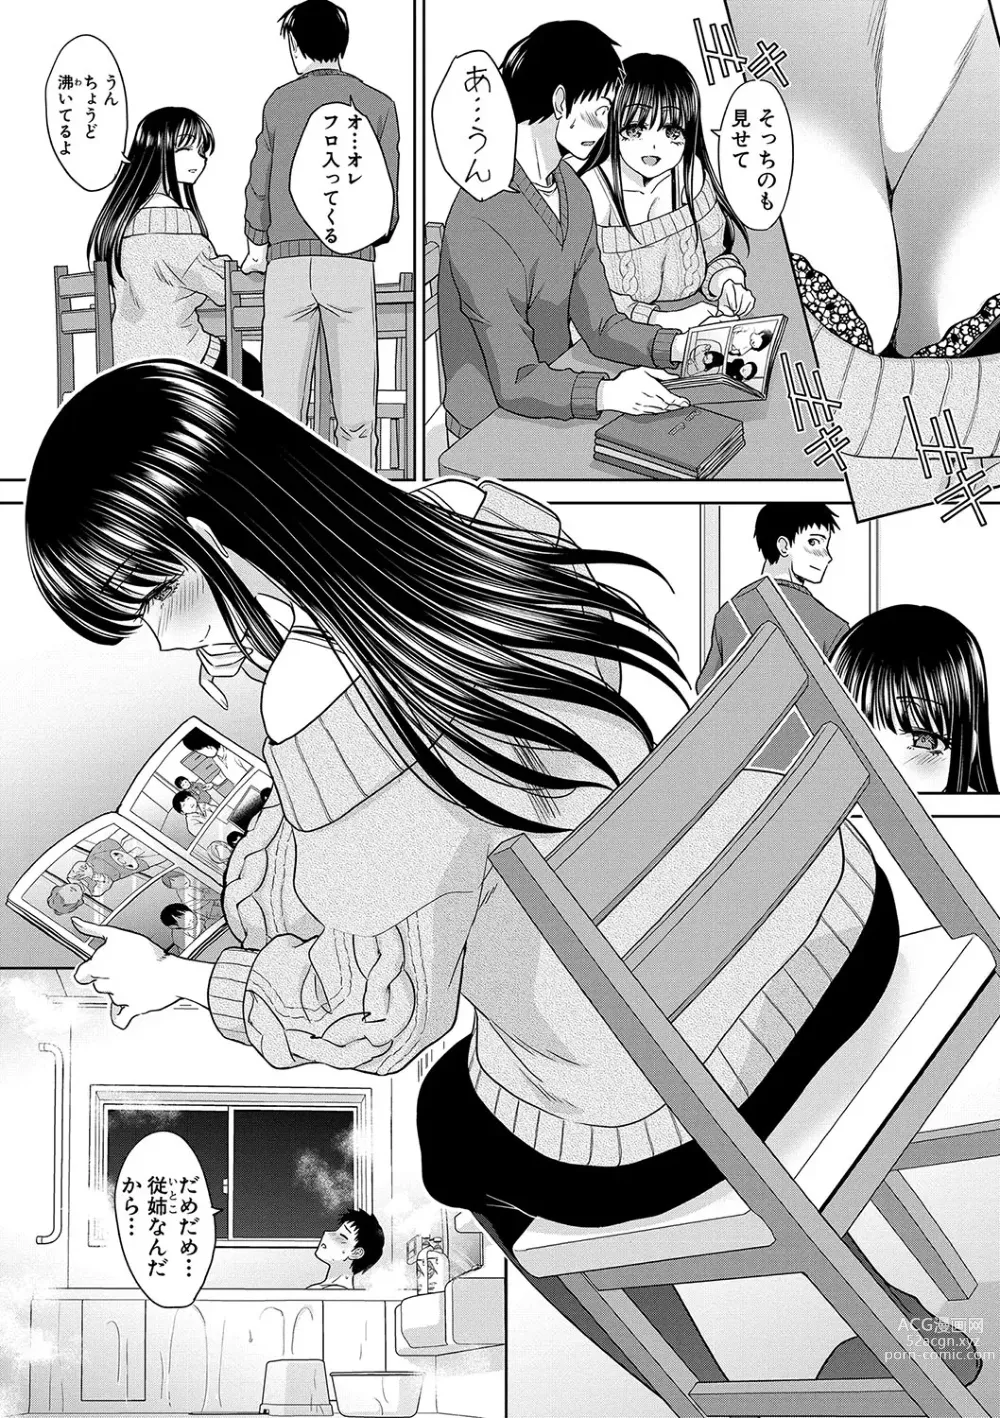 Page 8 of manga Shinseki Midara My Home Harem